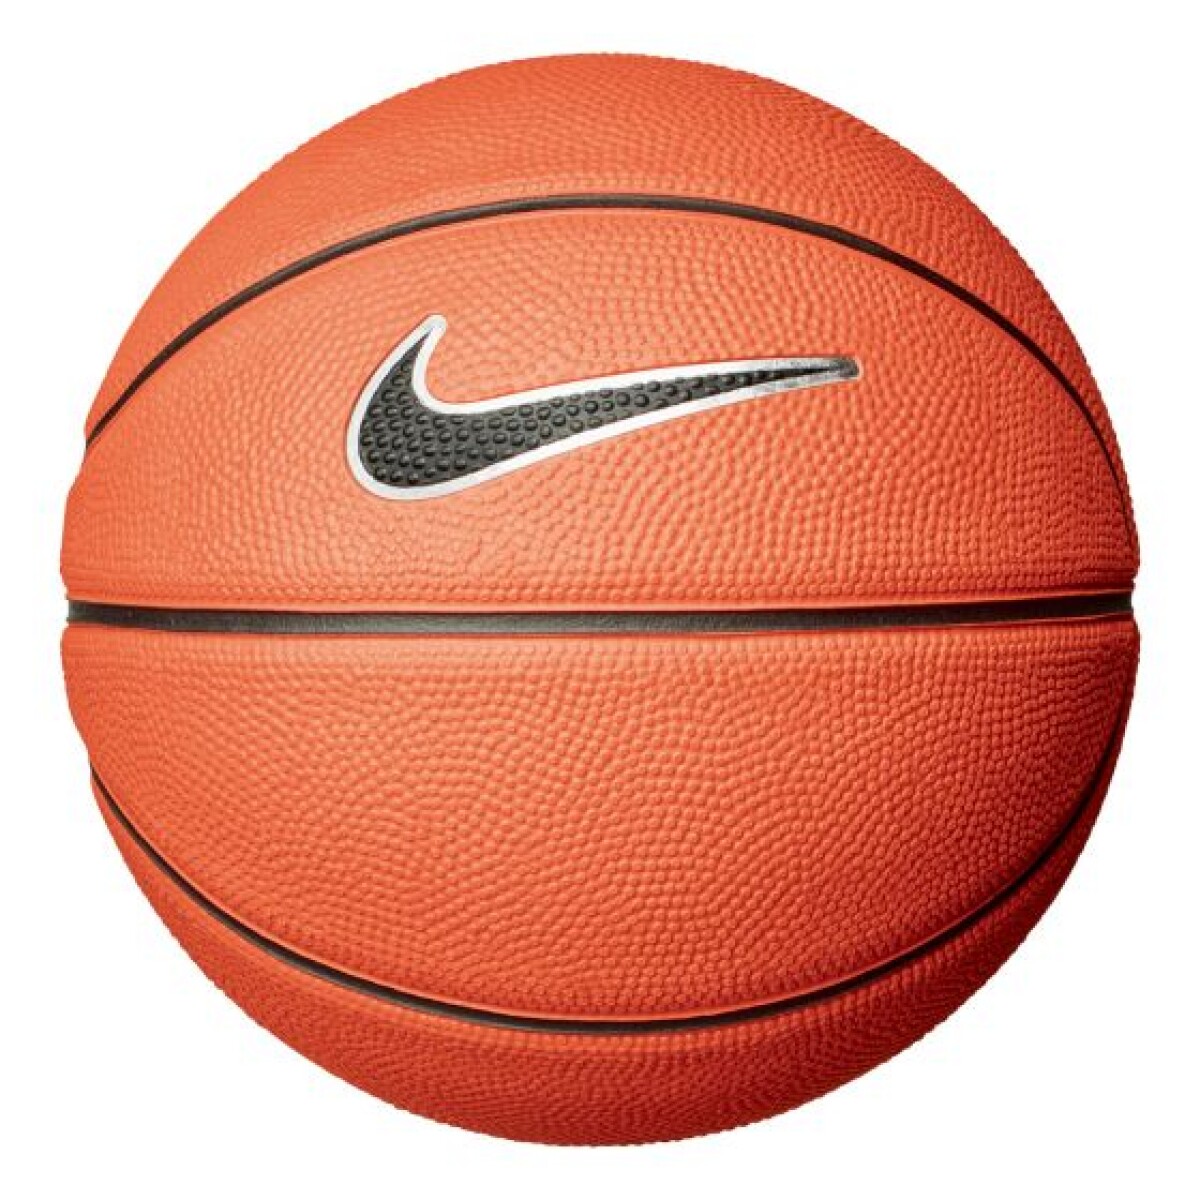 Pelota Nike Basket Skills Amber/Black - S/C 